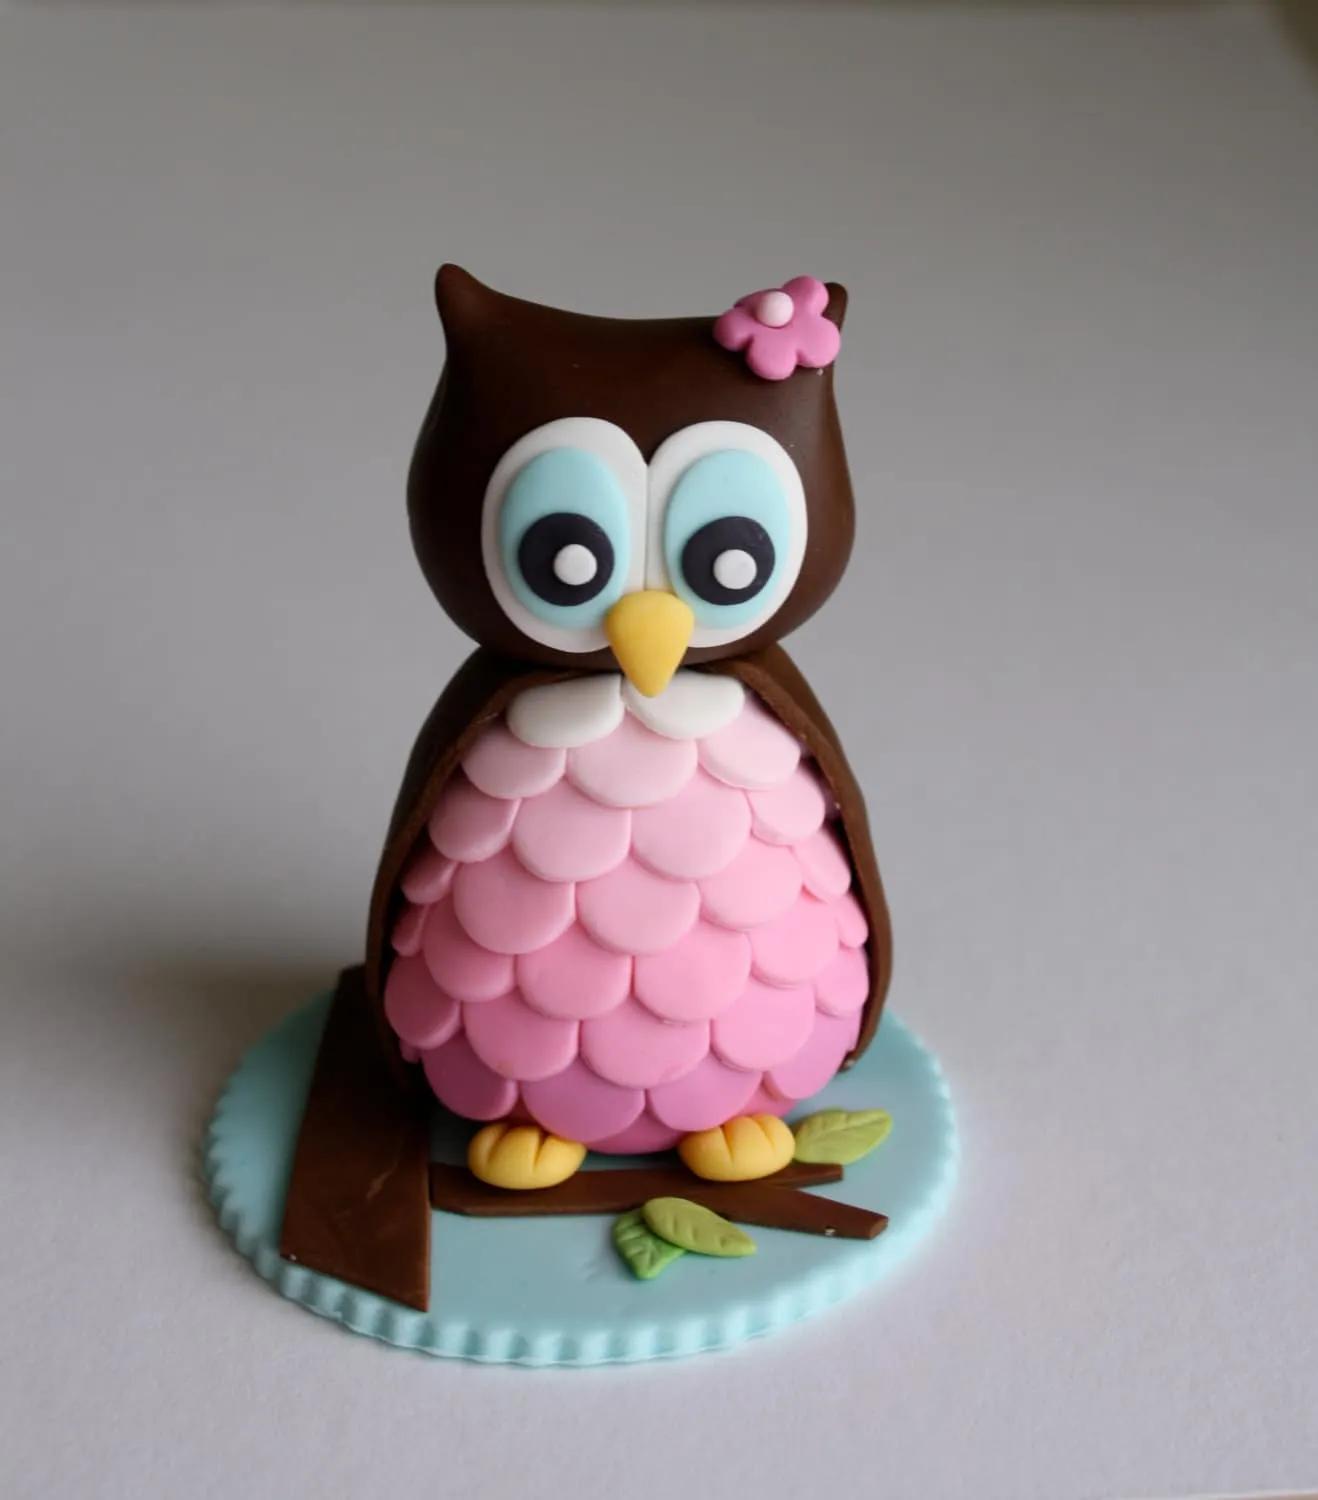 Fondant Girl Owl Cake Cupcake Topper by KimSeeEun on Etsy